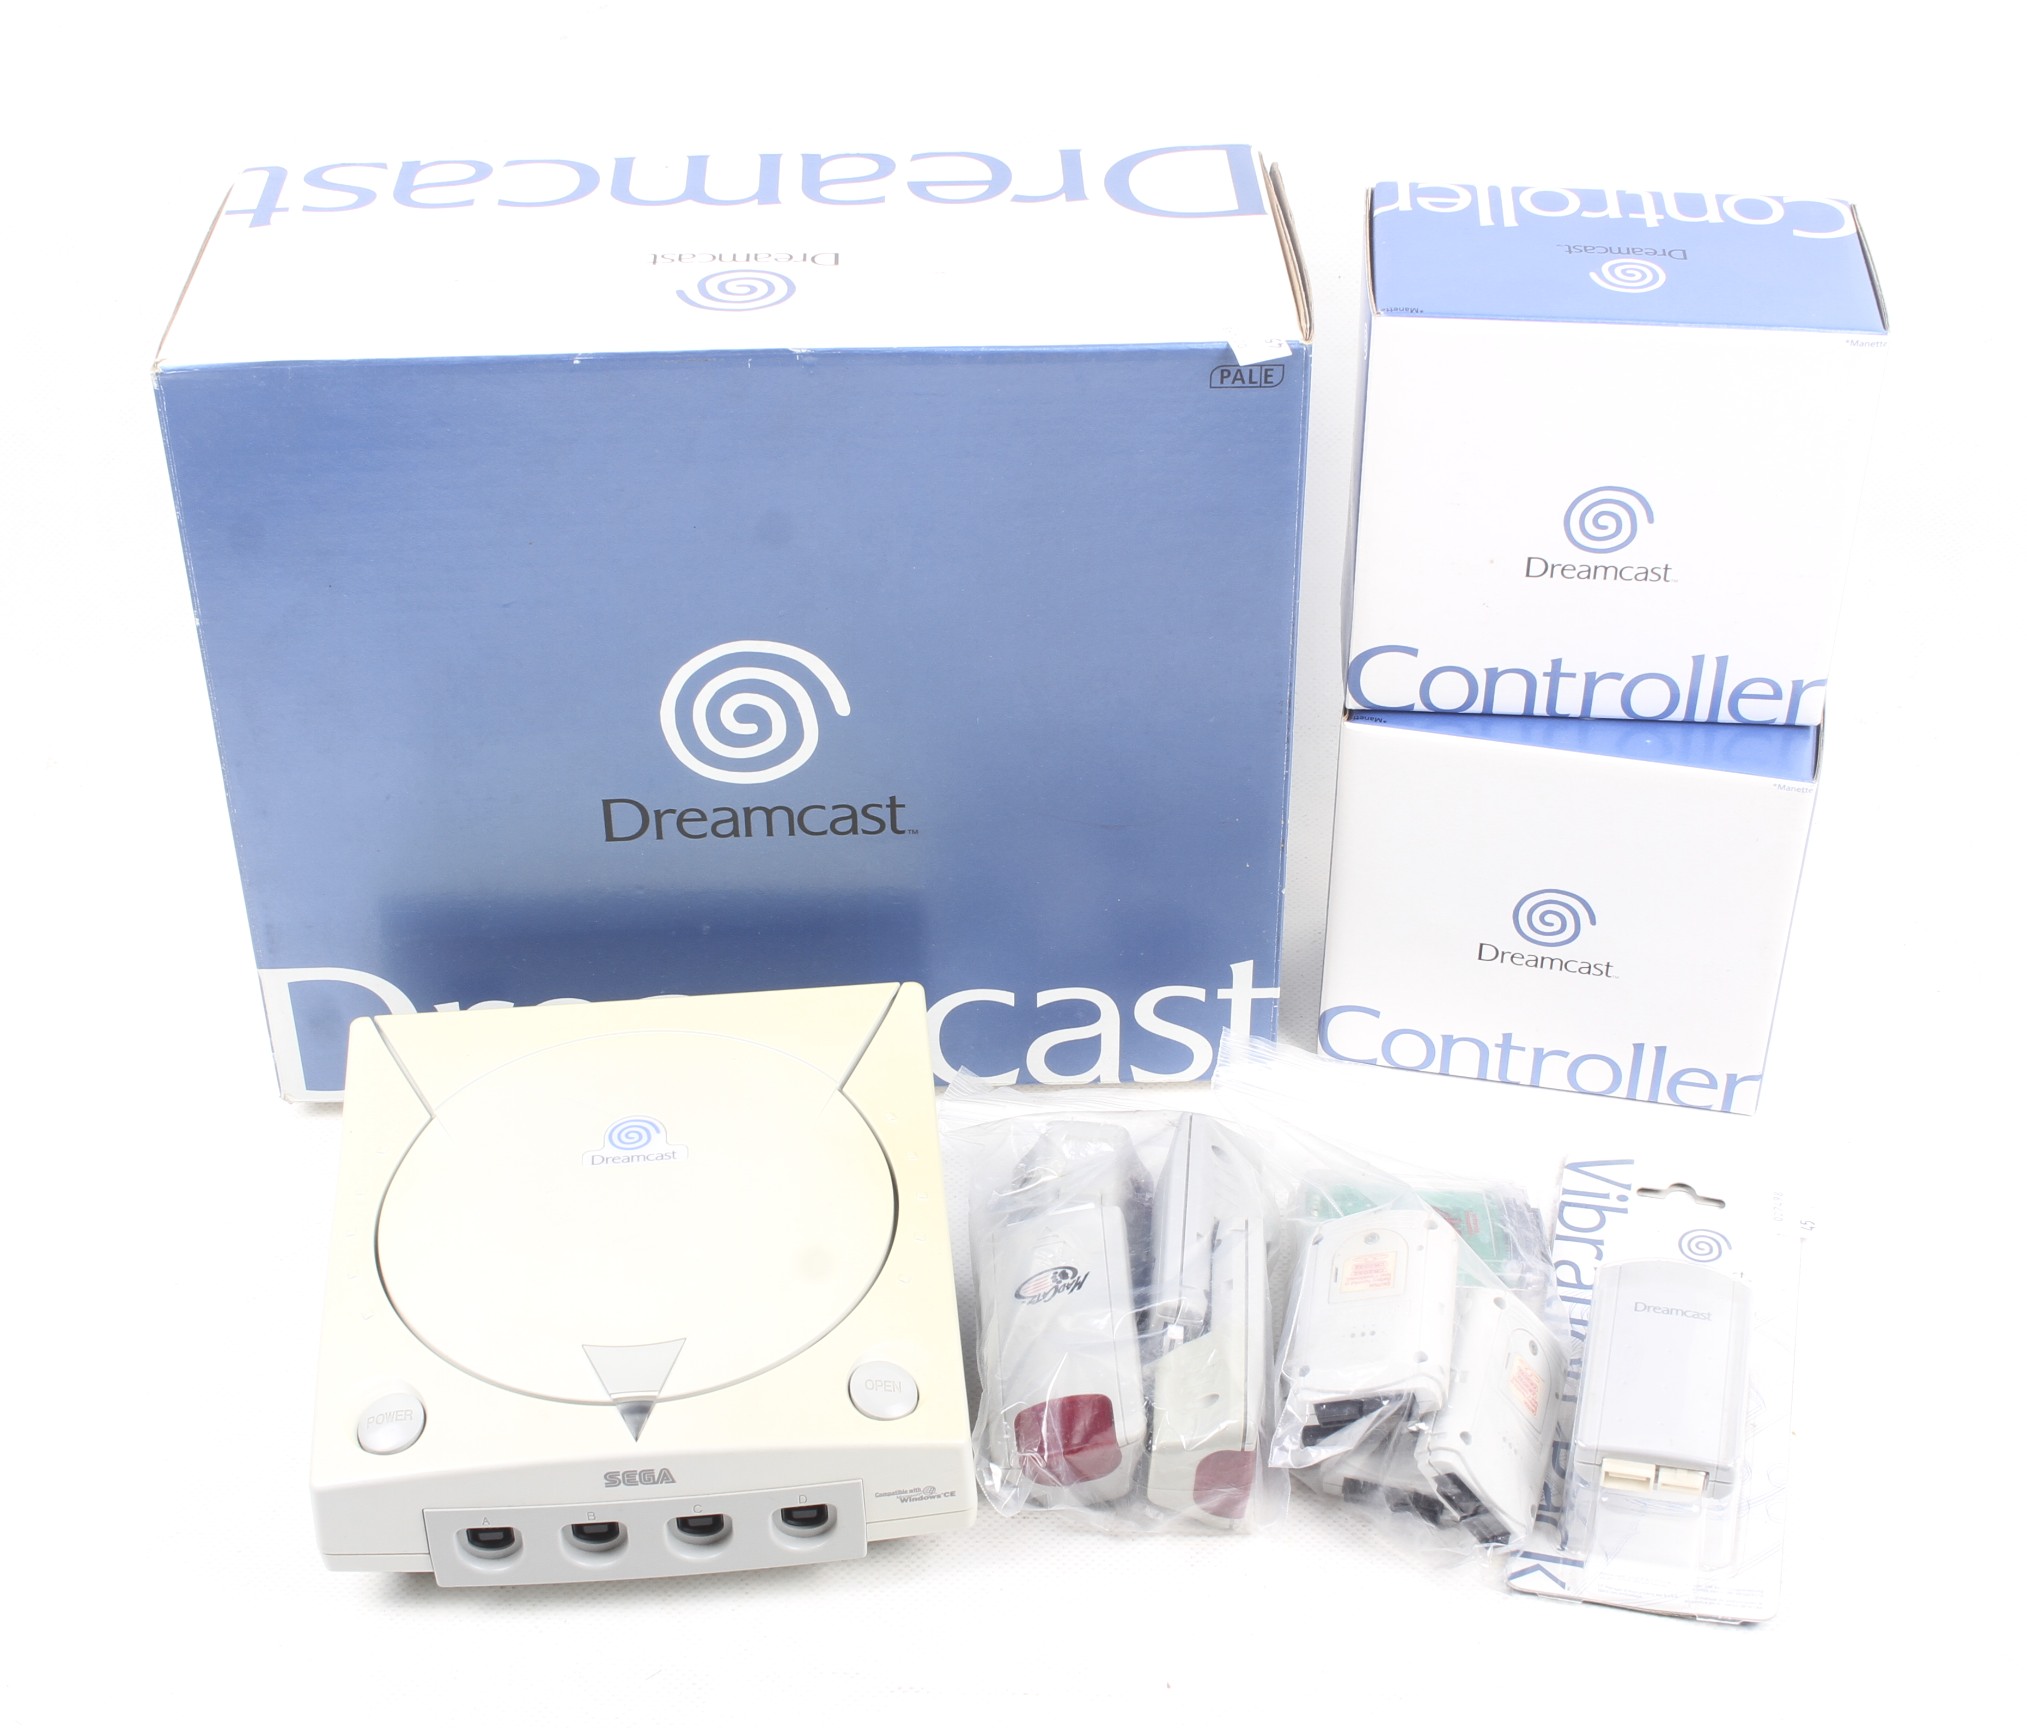 A Sega Dreamcast games console and accessories.